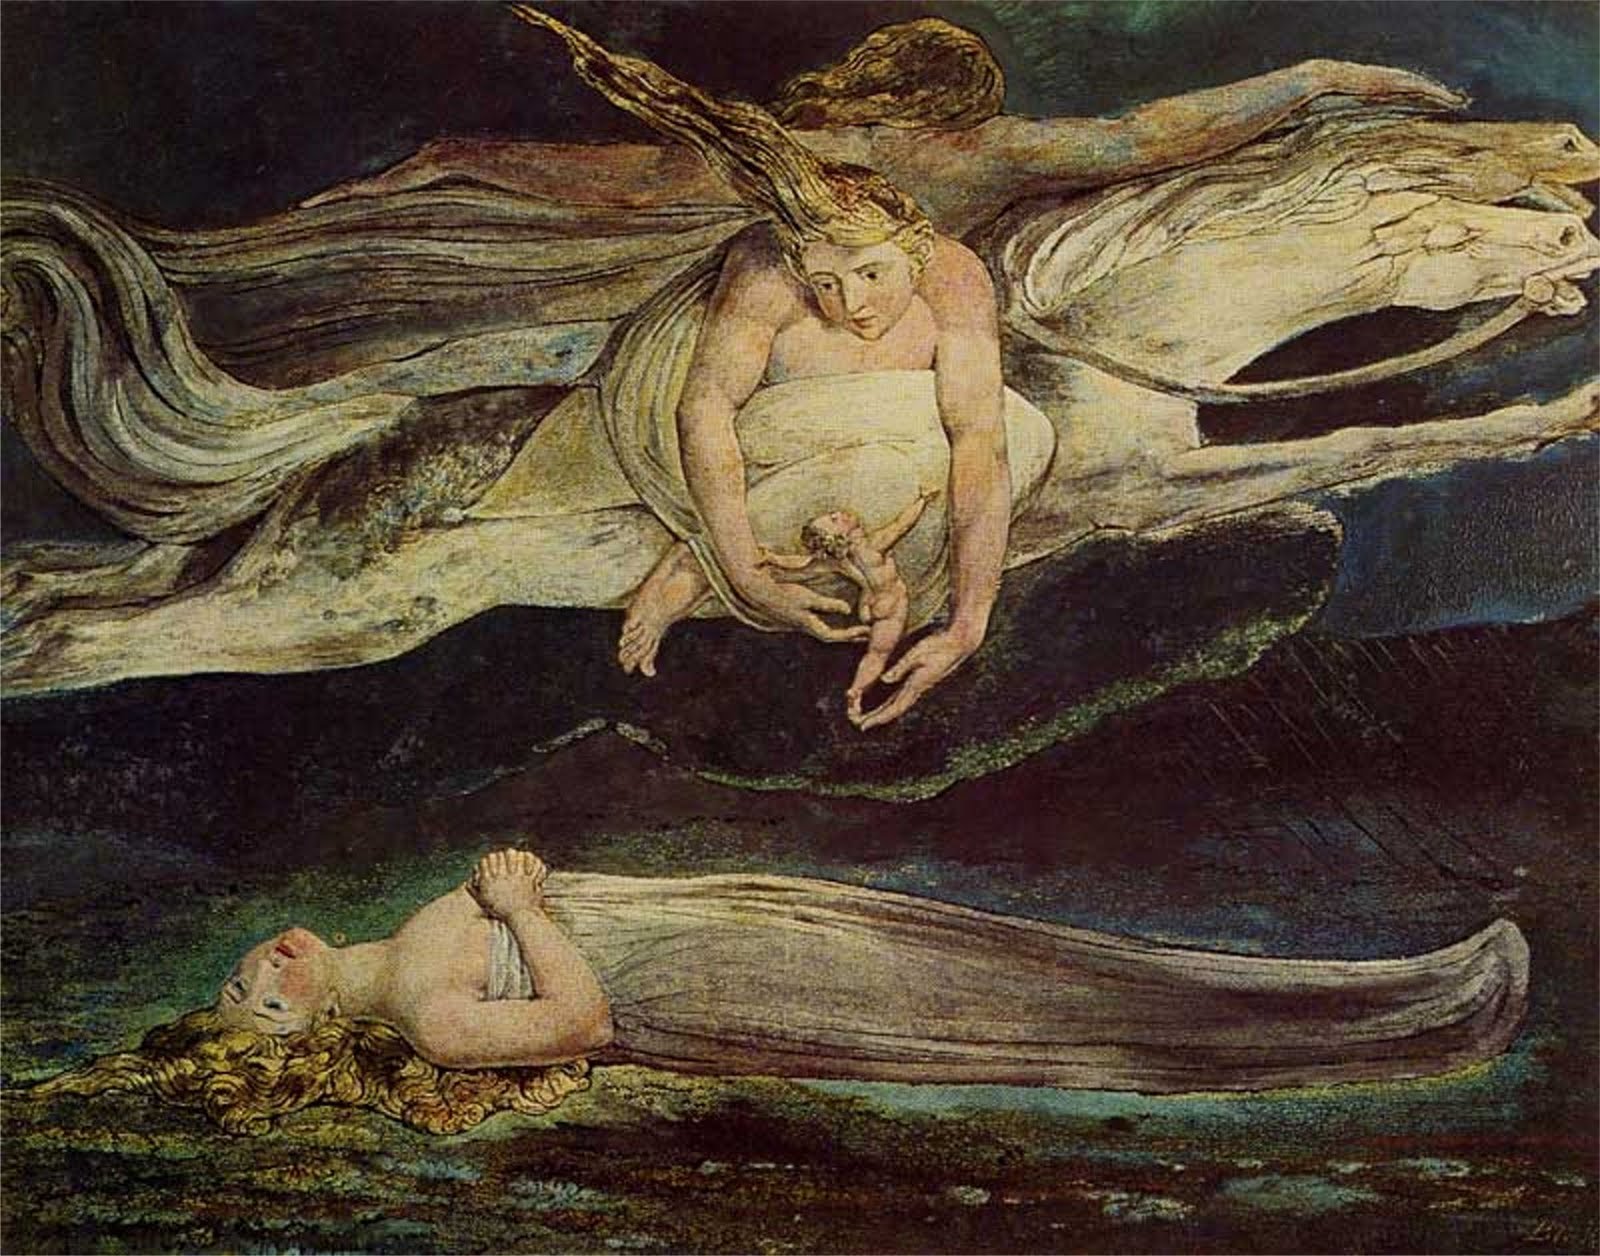 Piedade by William Blake - 1795 - - Tate Modern